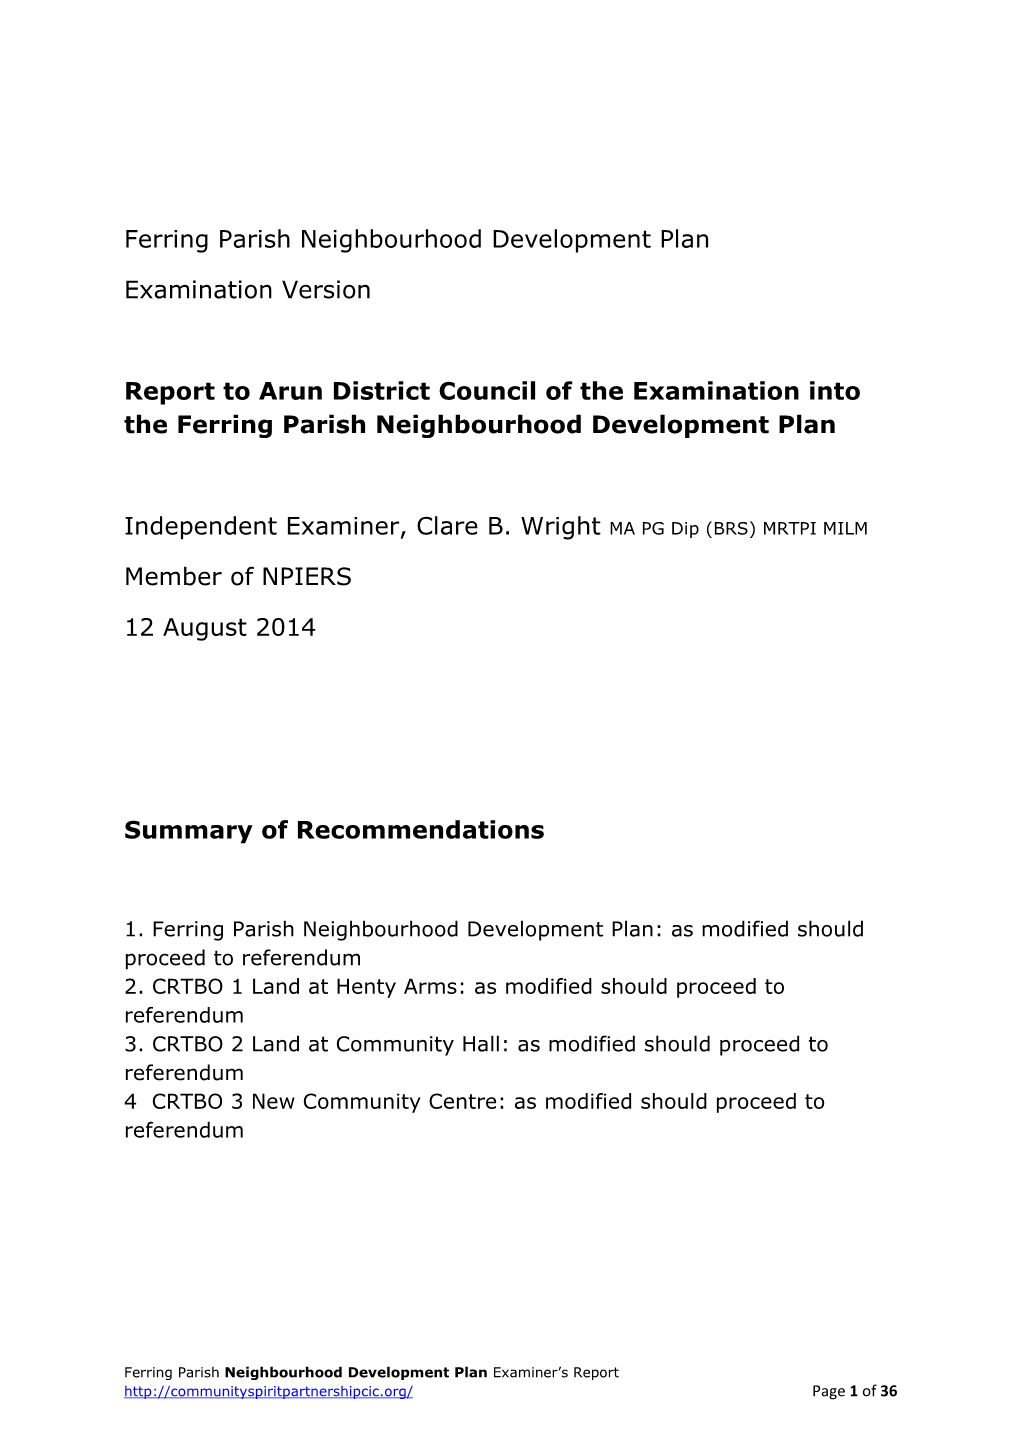 Ferring Parish Neighbourhood Development Plan Examination